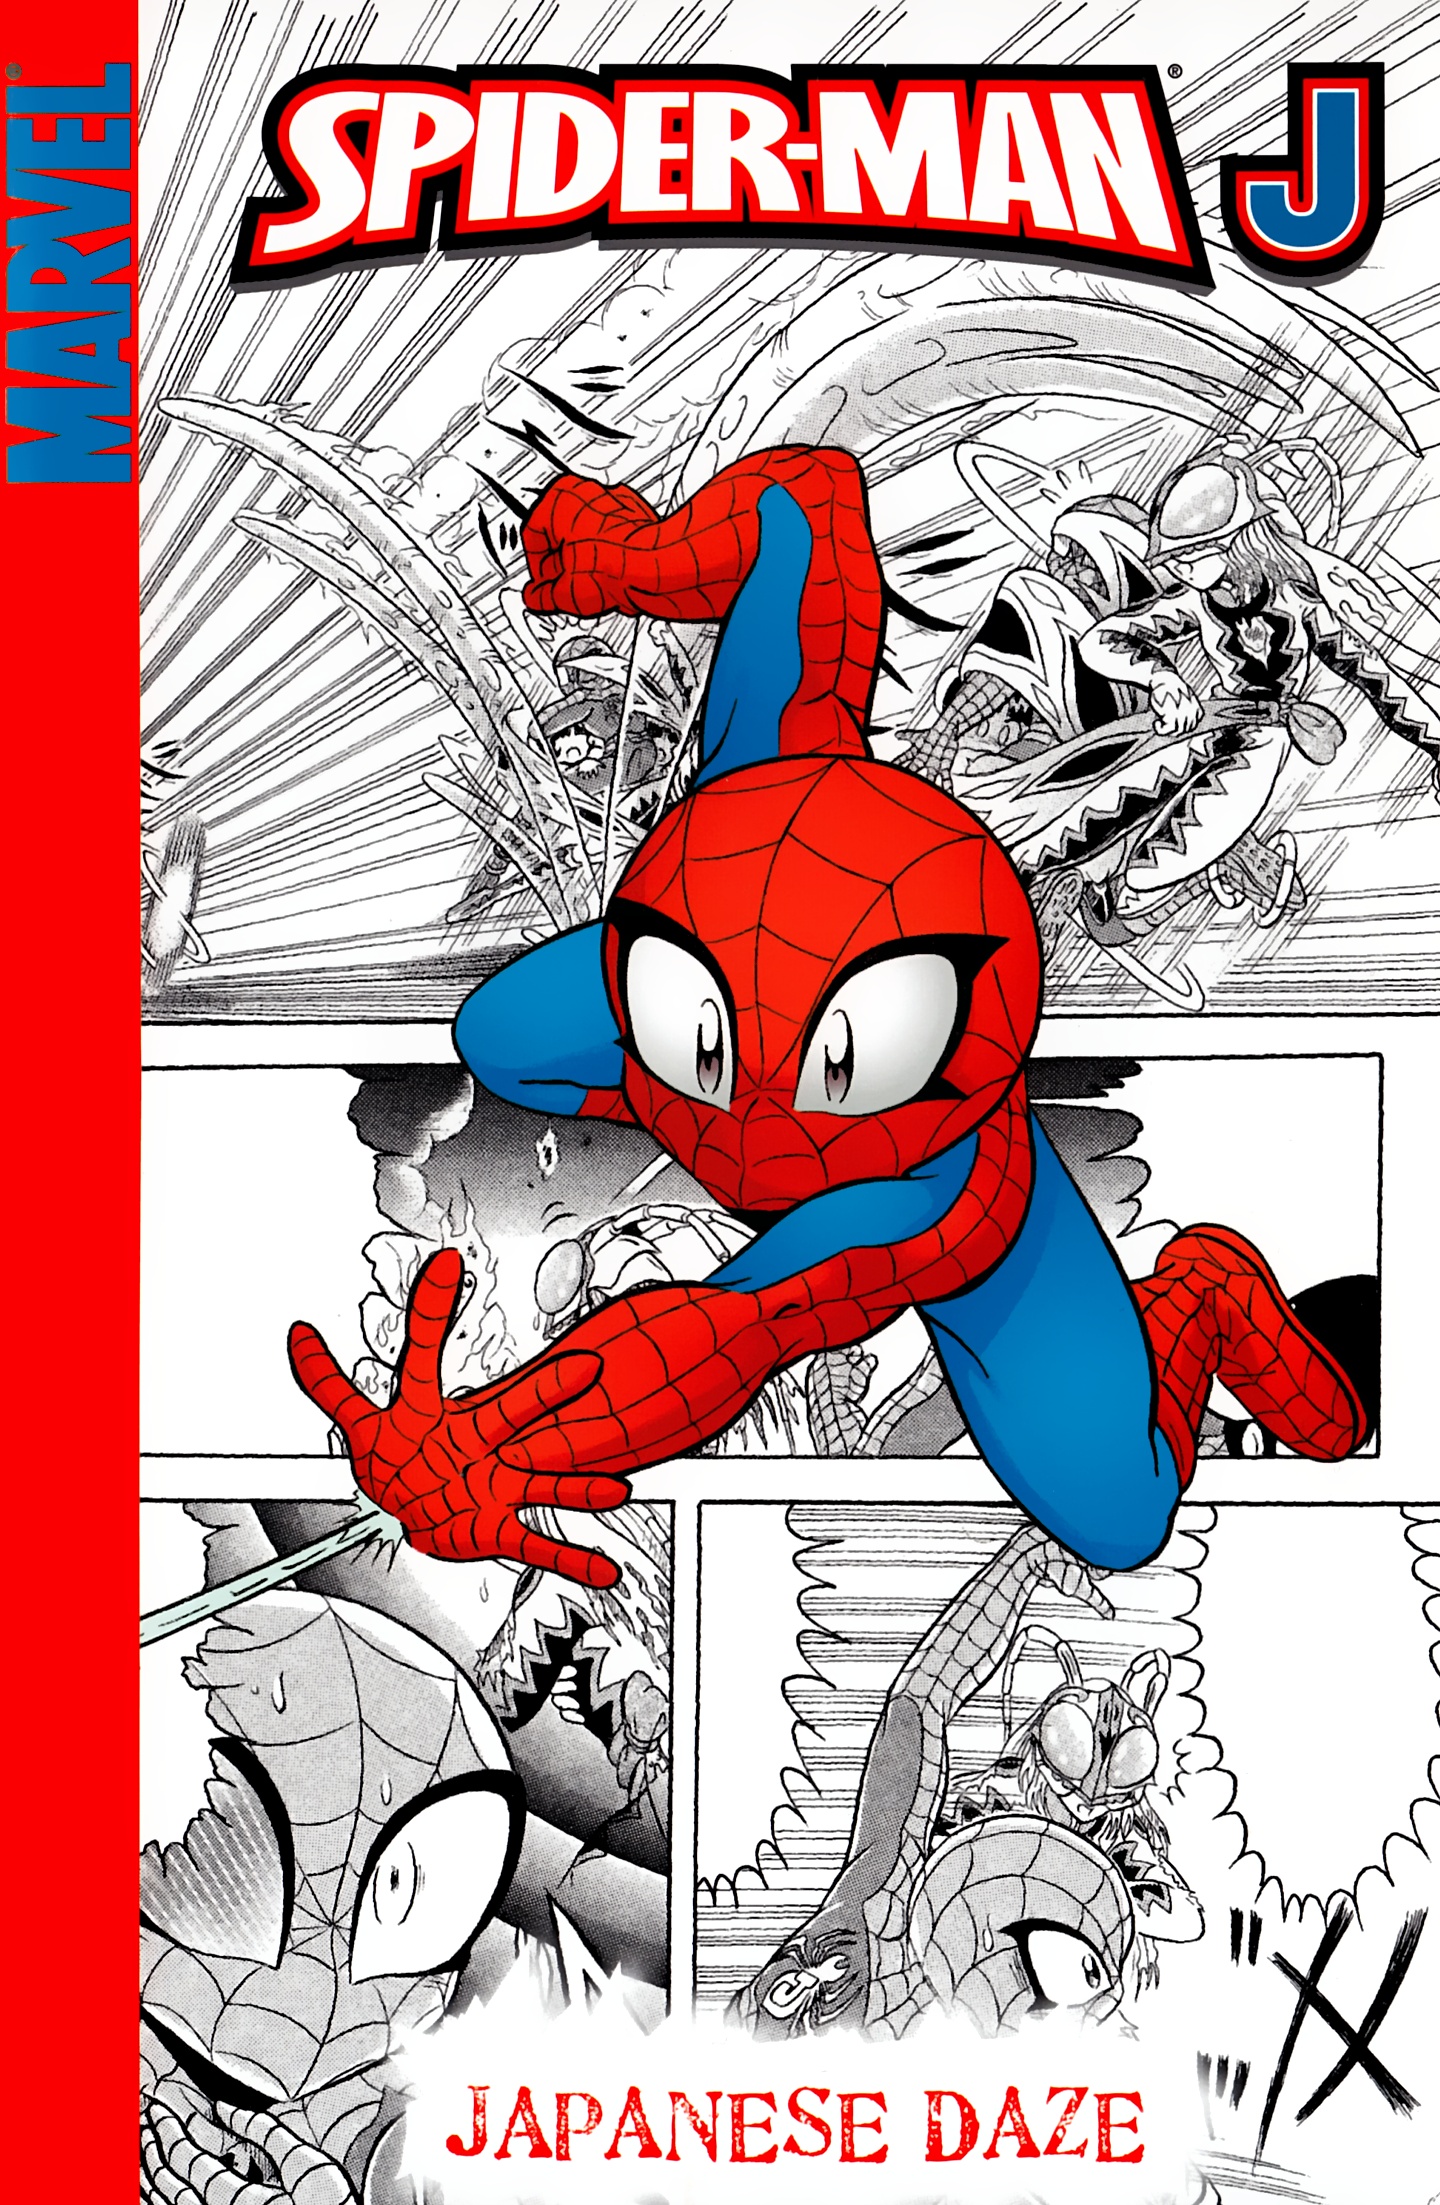 Read online Spider-Man J comic -  Issue # TPB 2 - 1